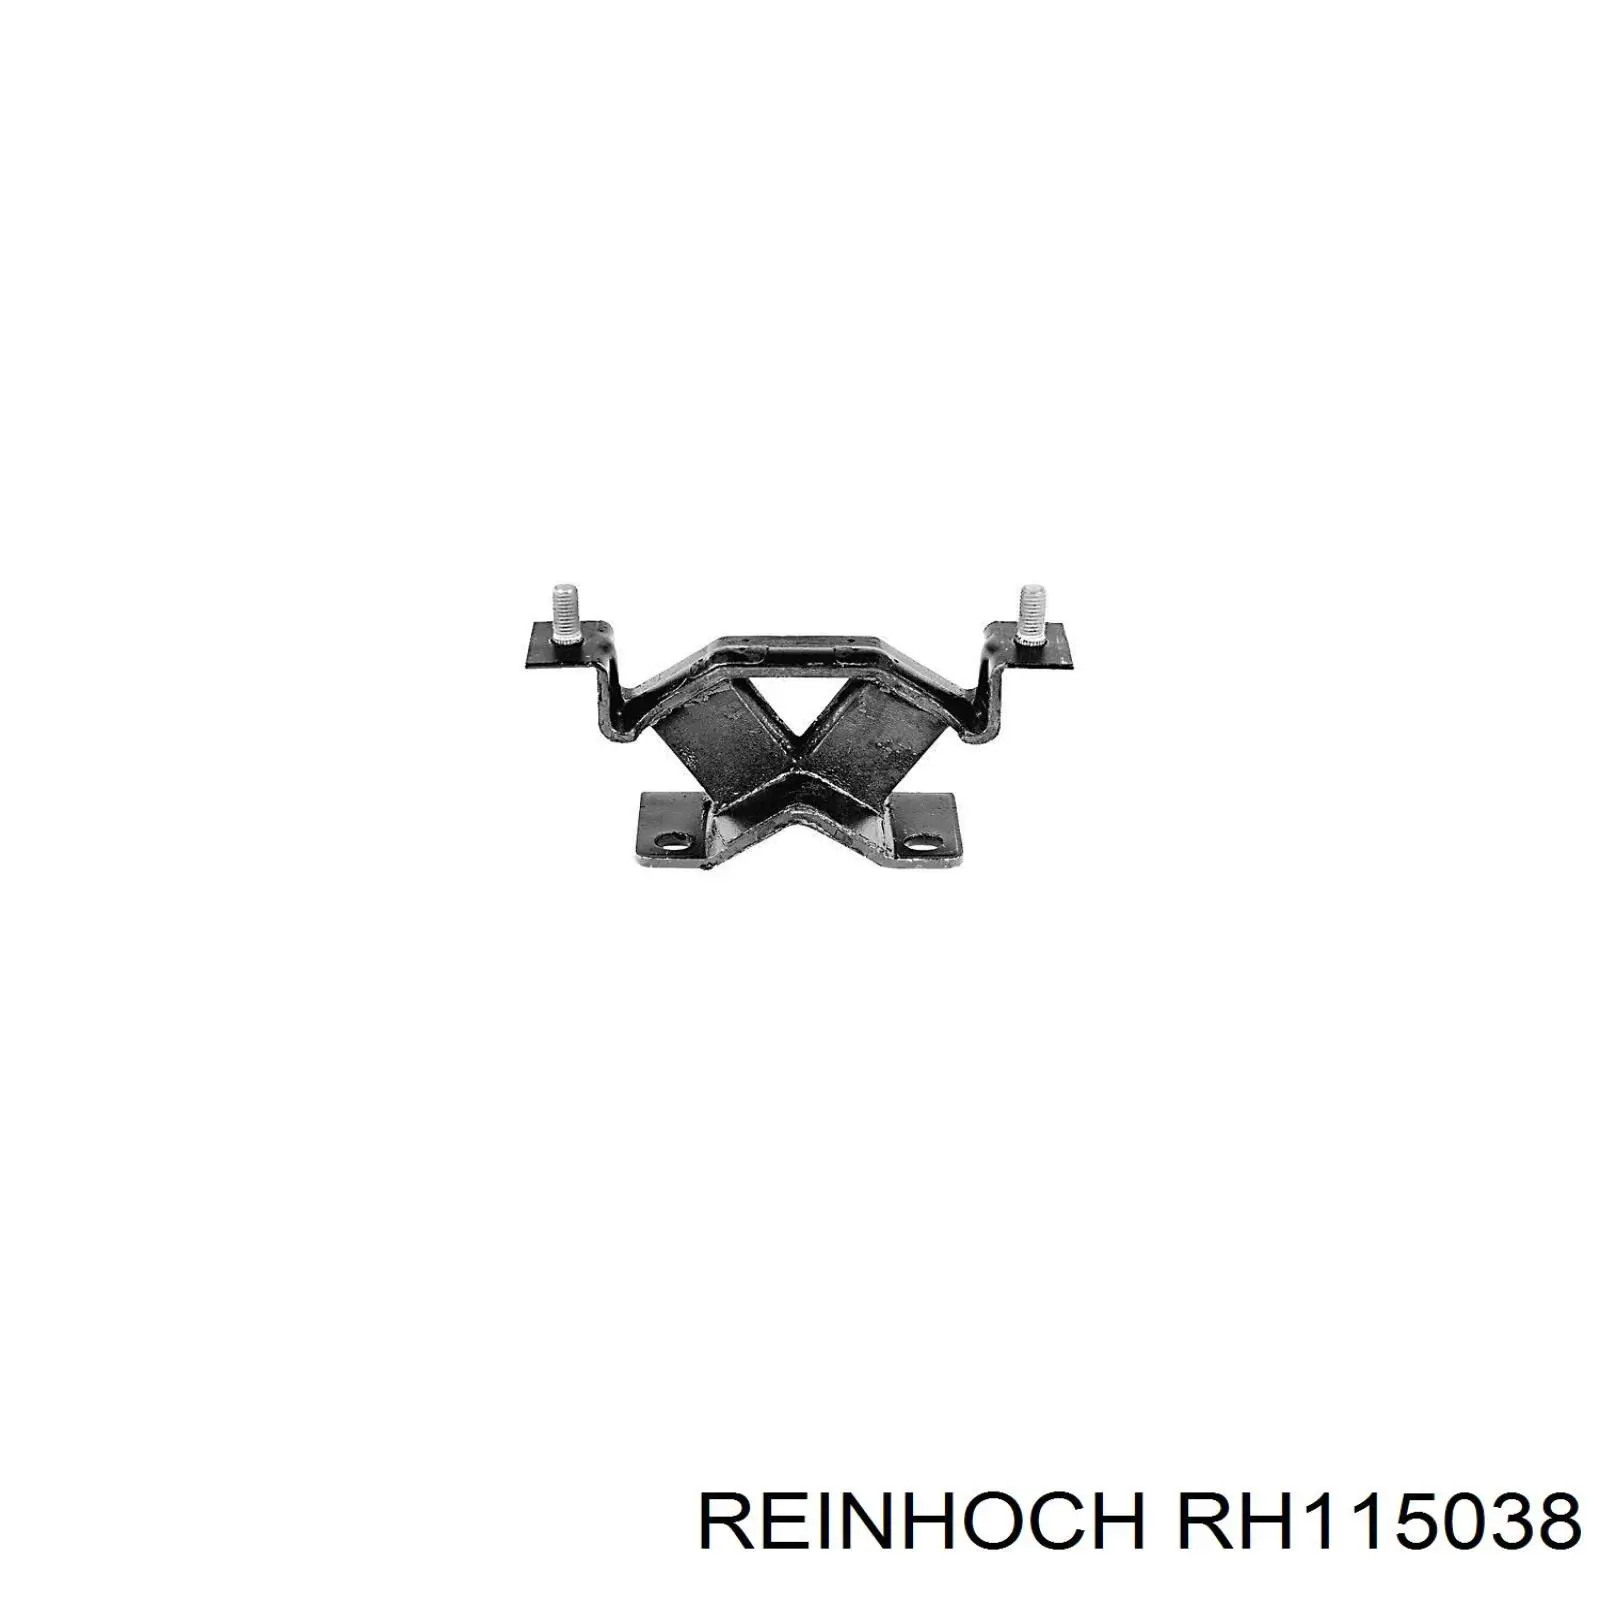 RH115038 Reinhoch